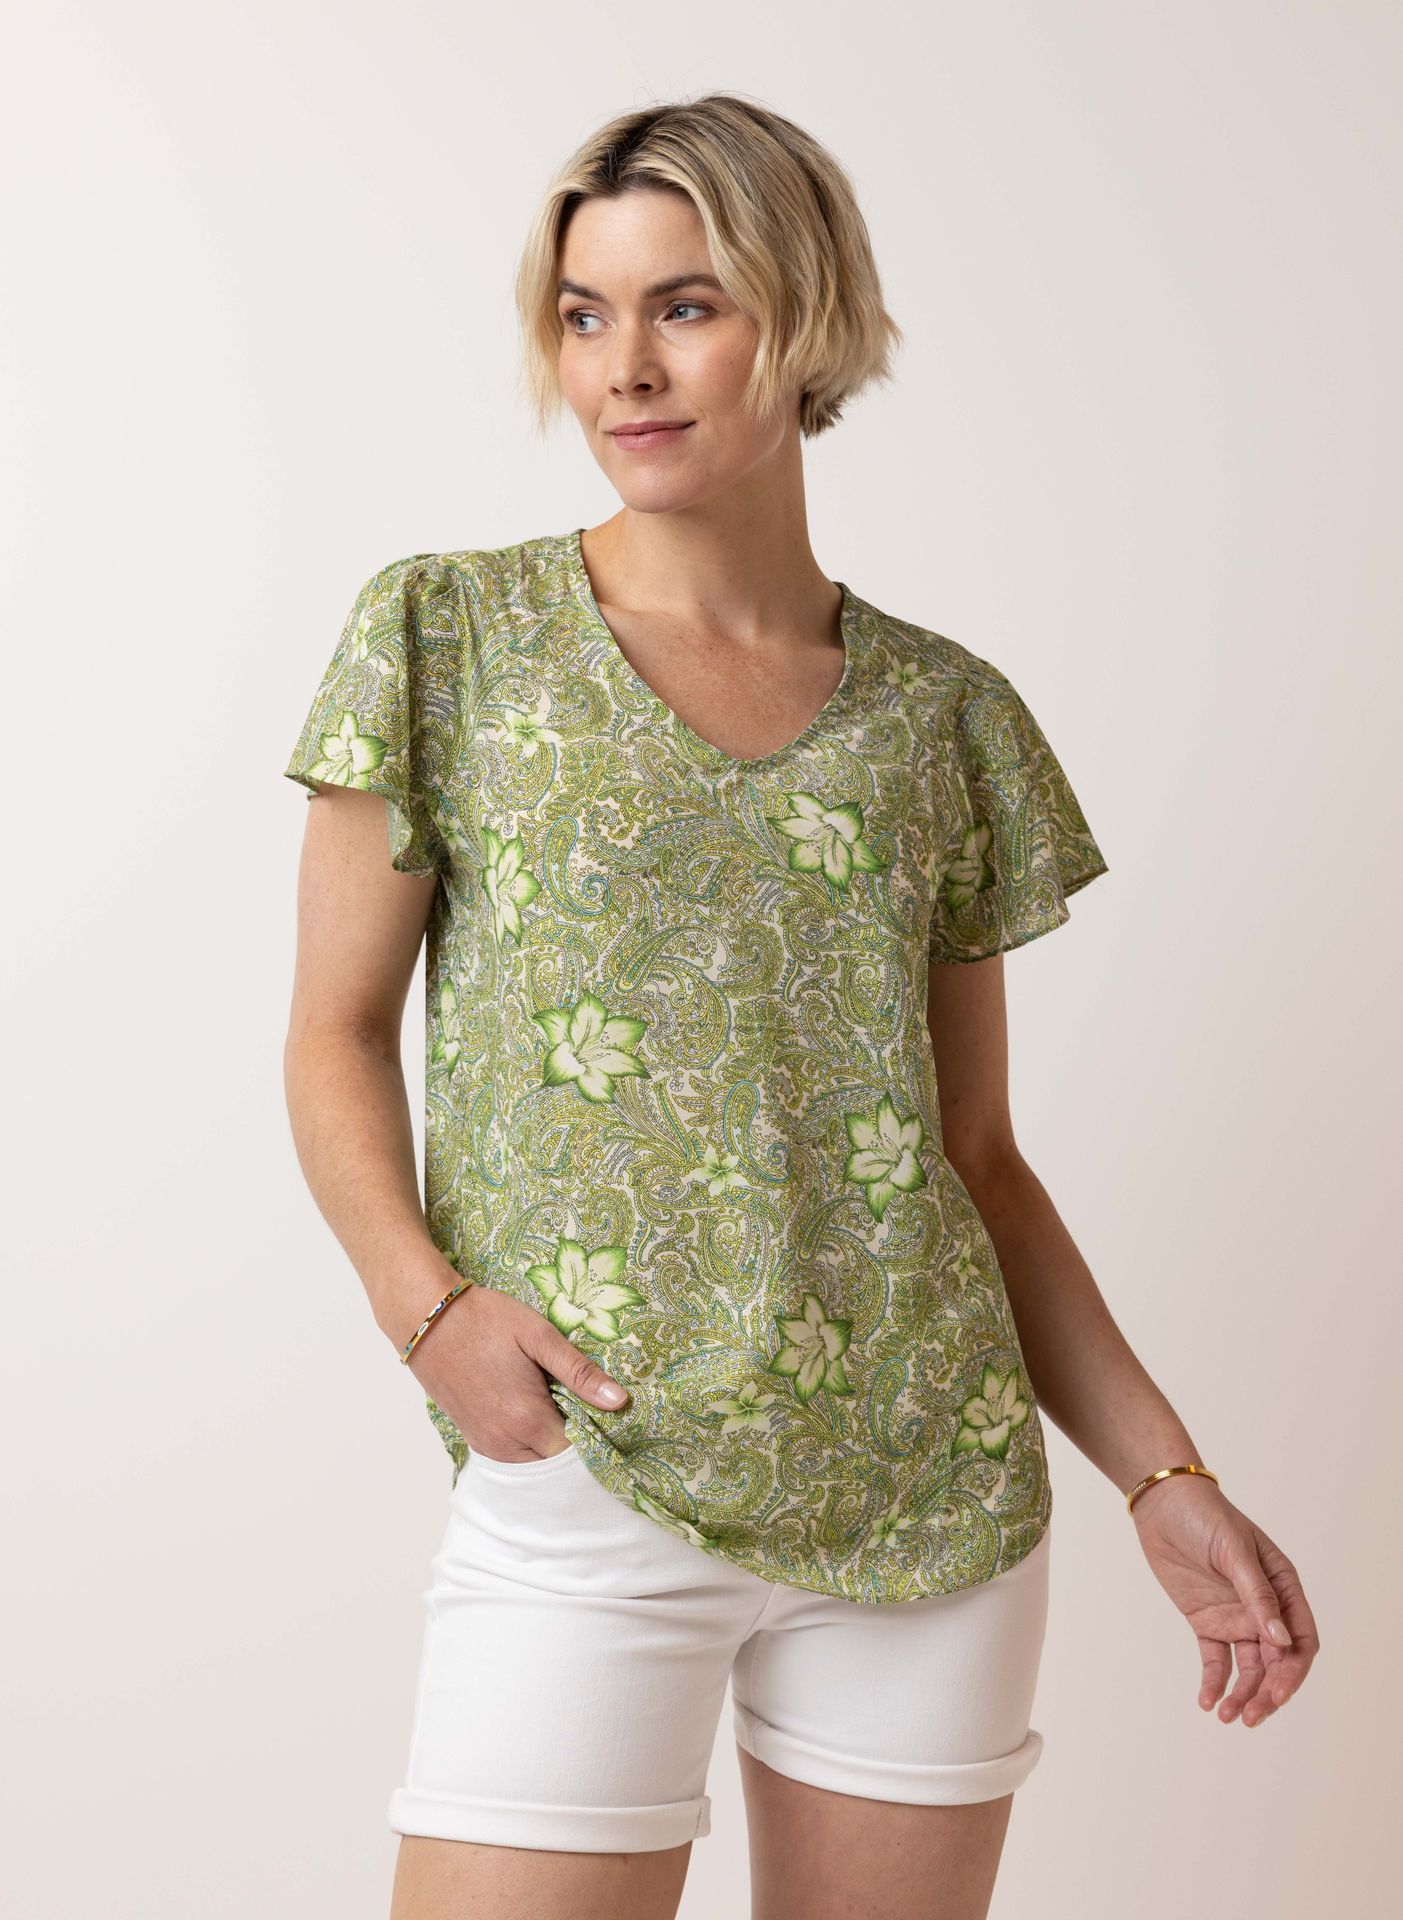 Norah Groene blouse apple green multicolor 212859-504